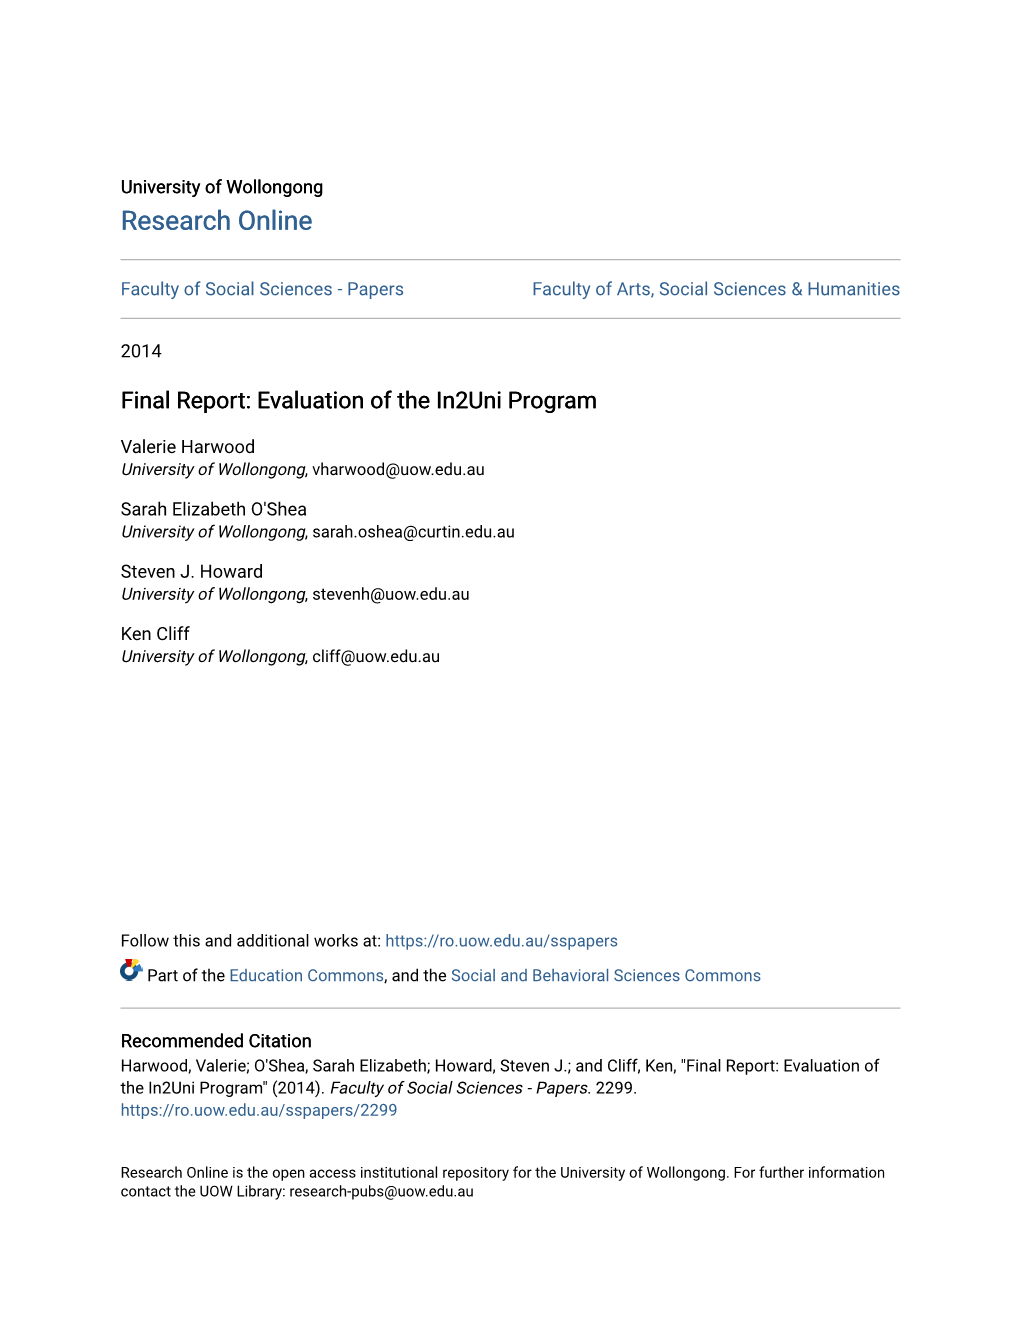 Evaluation of the In2uni Program